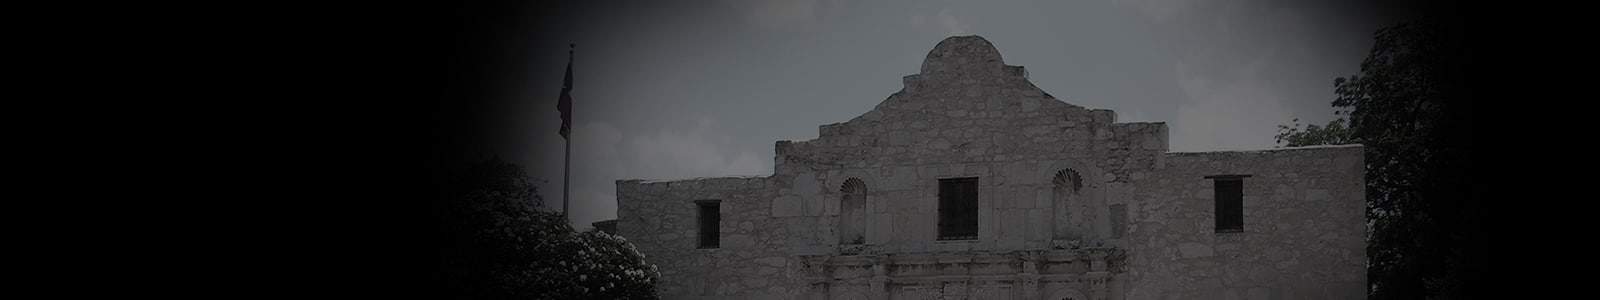 San Antonio Roofers - Historic Alamo